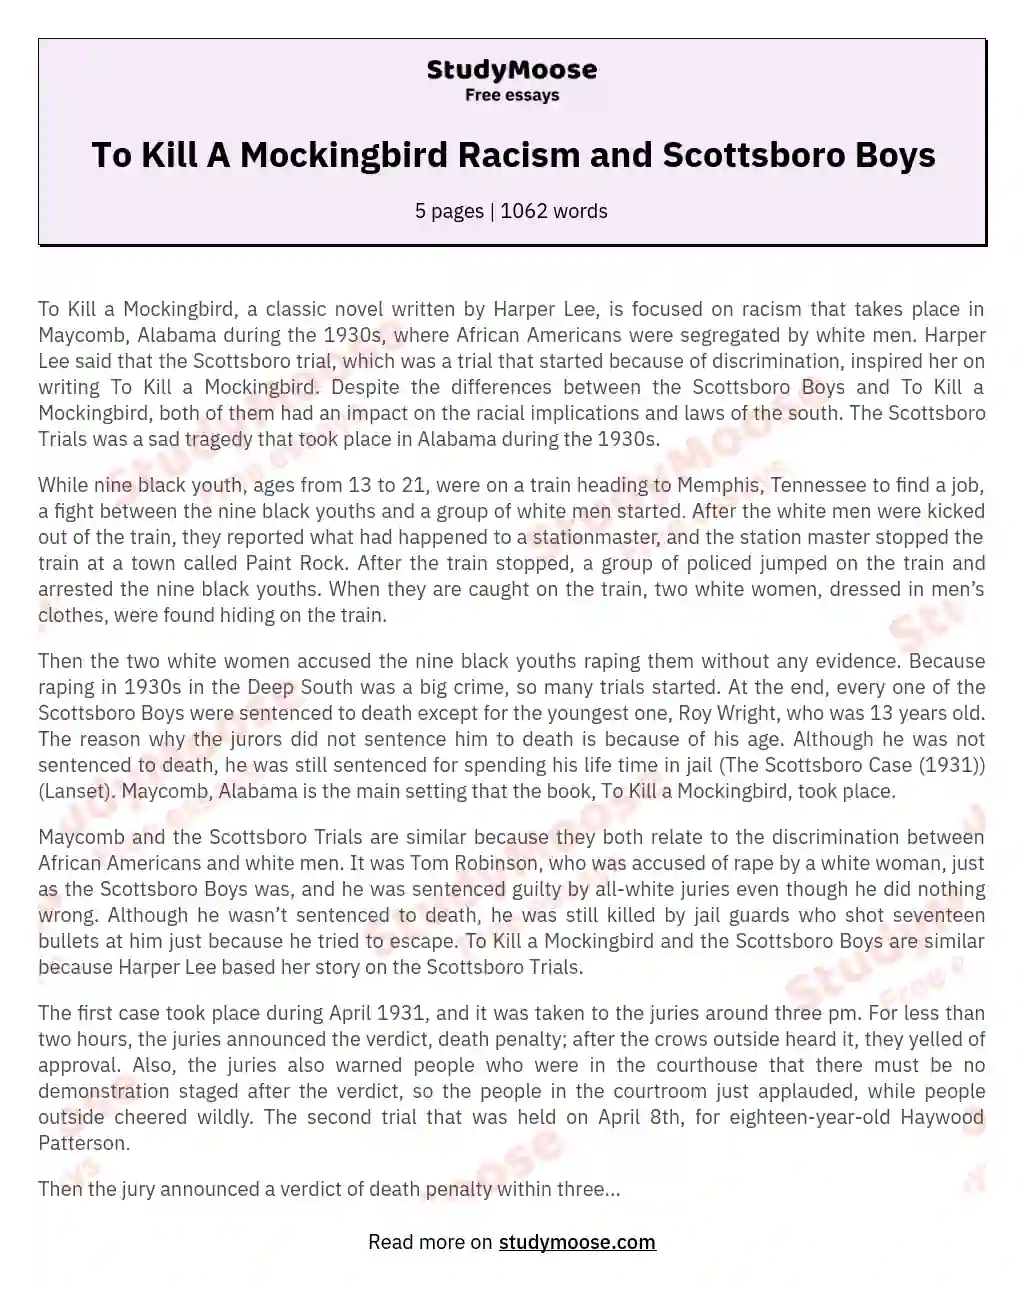 To Kill A Mockingbird Racism and Scottsboro Boys